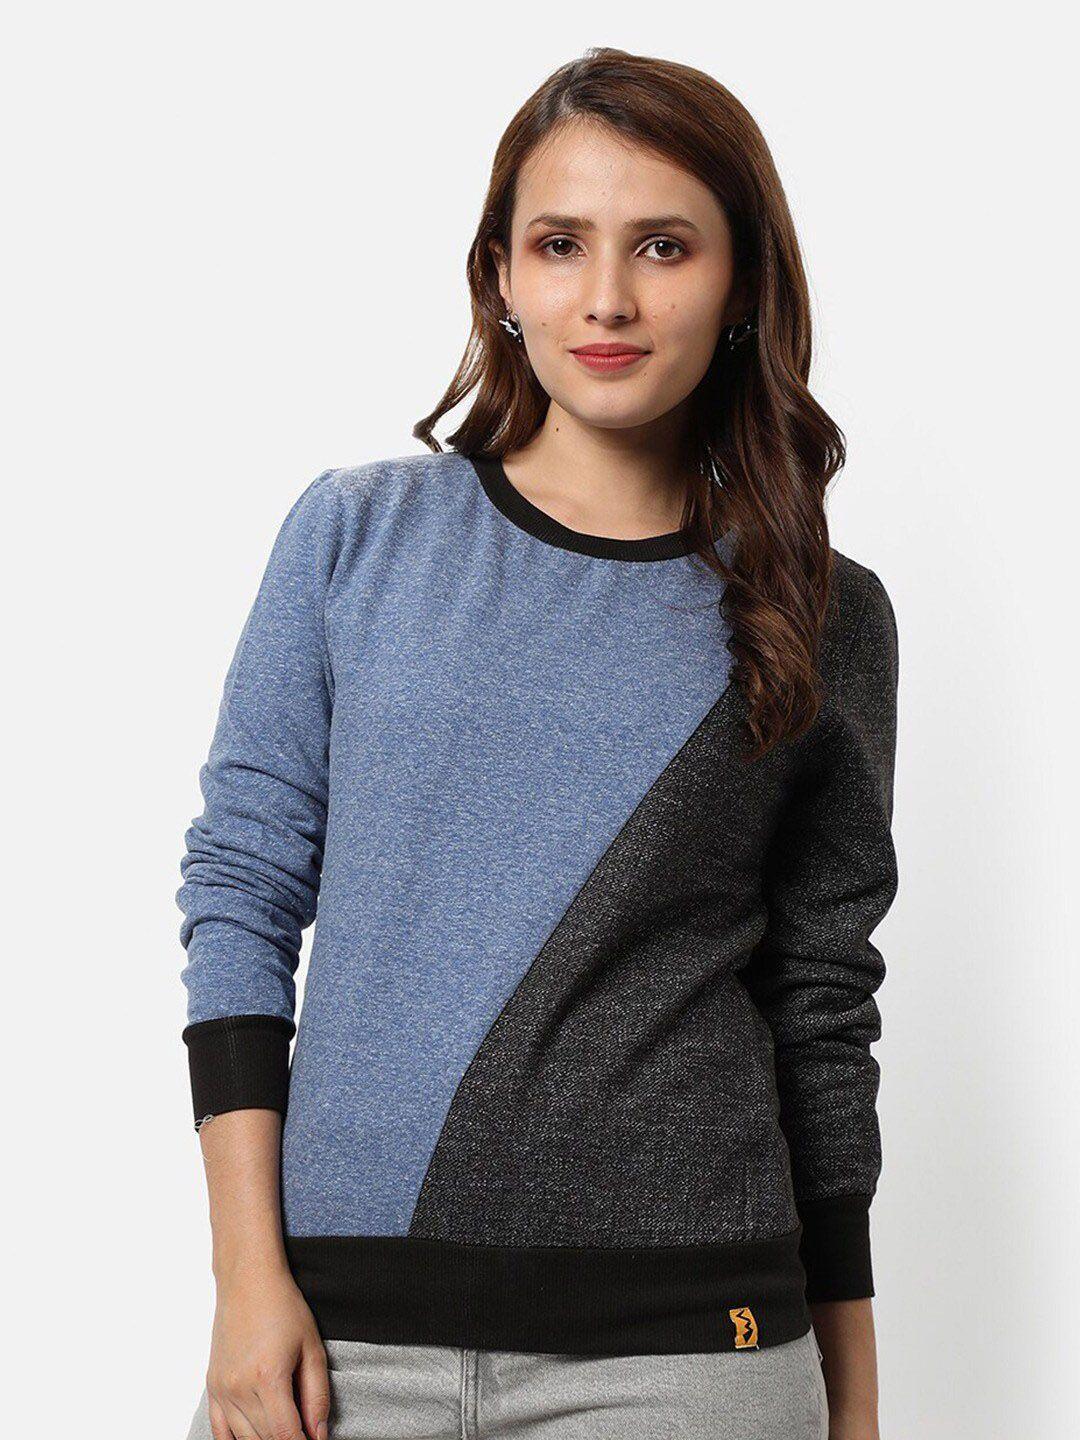 campus-sutra-blue-&-black-colourblocked-cotton-pullover-sweatshirt